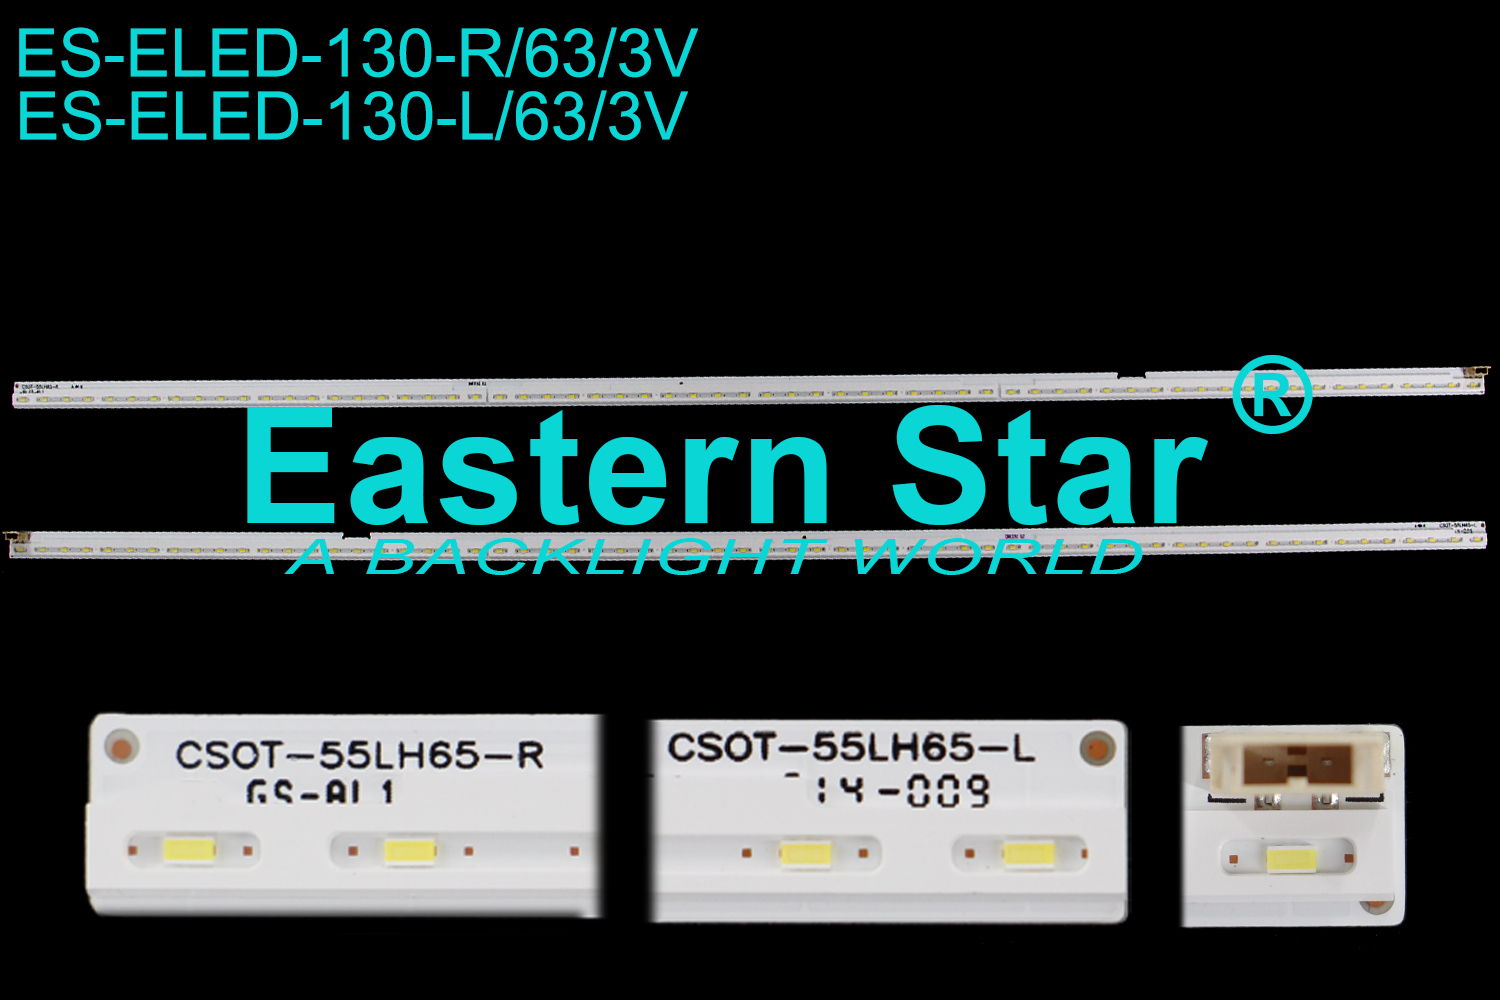 ES-ELED-130 ELED/EDGE TV backlight use for Lg 55'' 63LEDs CSOT-55LH65-R/L  RNFF/DREI92 E/Q2 led strips(2)